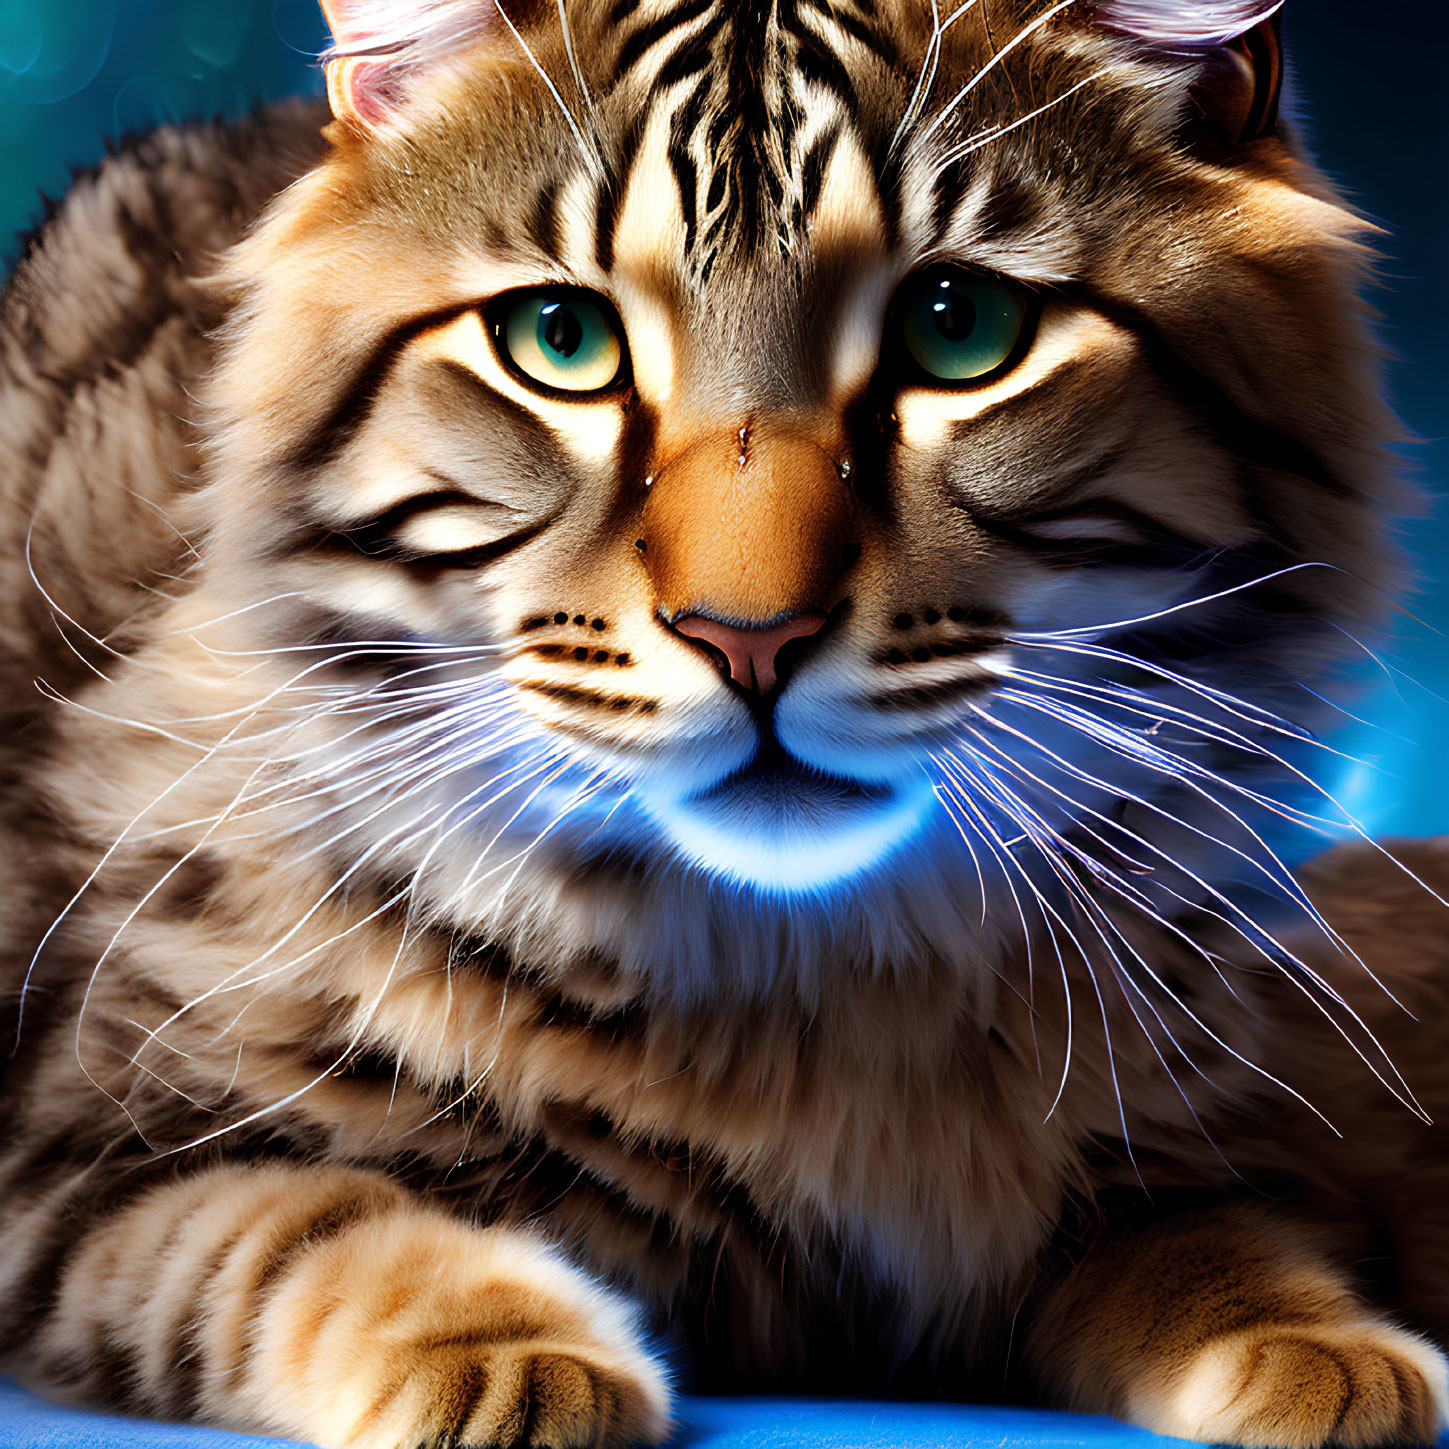 Detailed Digital Artwork: Tiger with Green Eyes on Blue Background